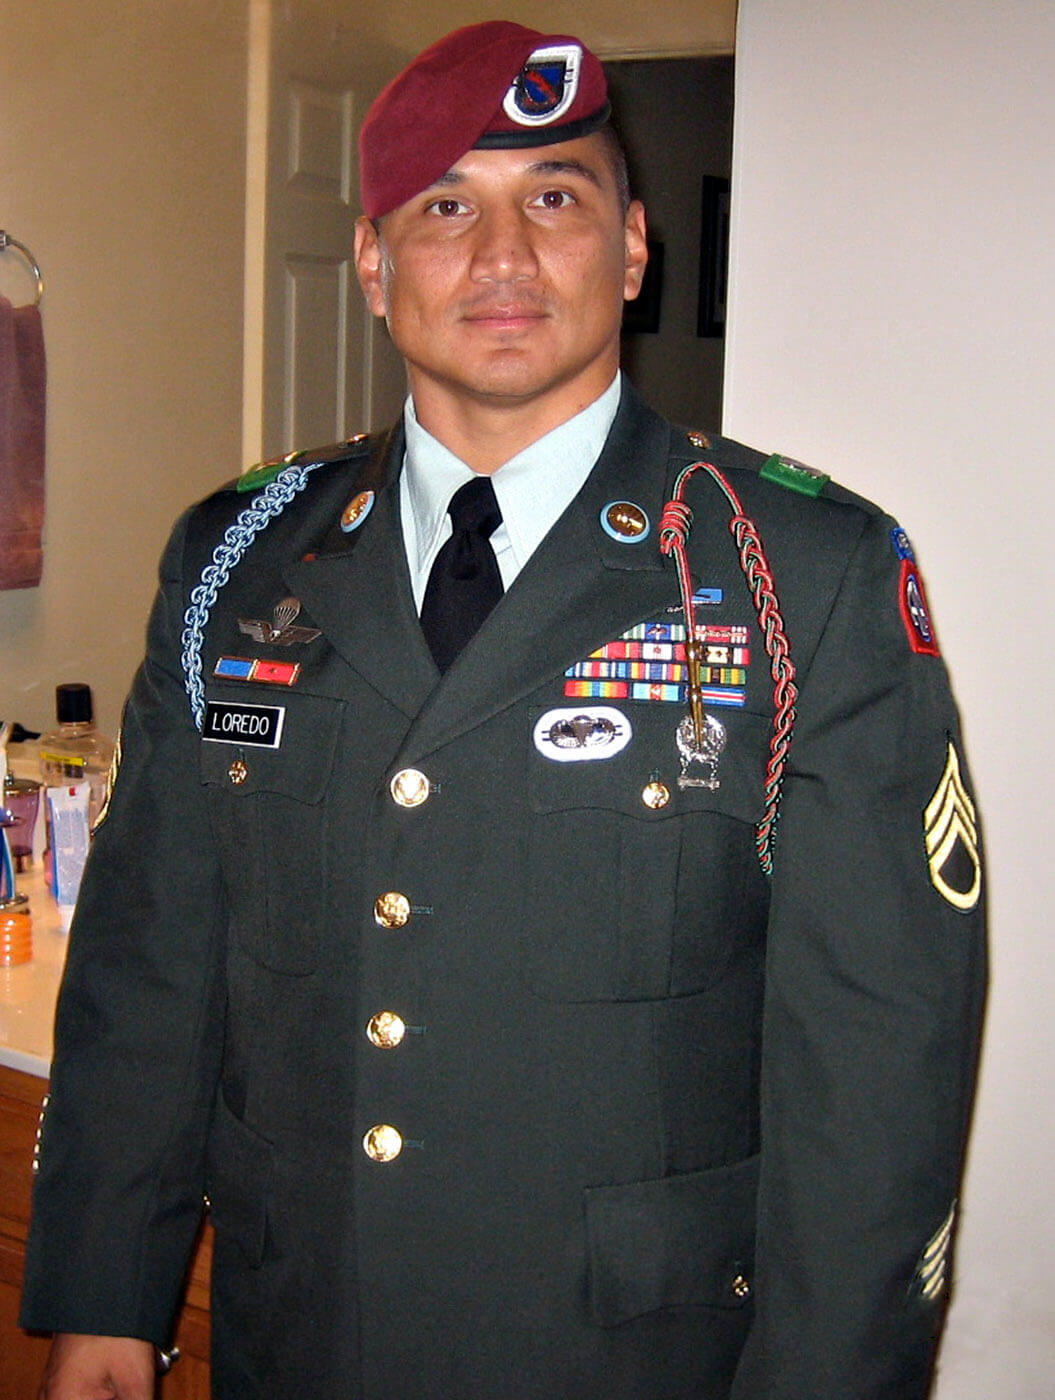 U.S. Army Staff Sergeant Edwardo Loredo, hero wod workout of the day crossfit challenge